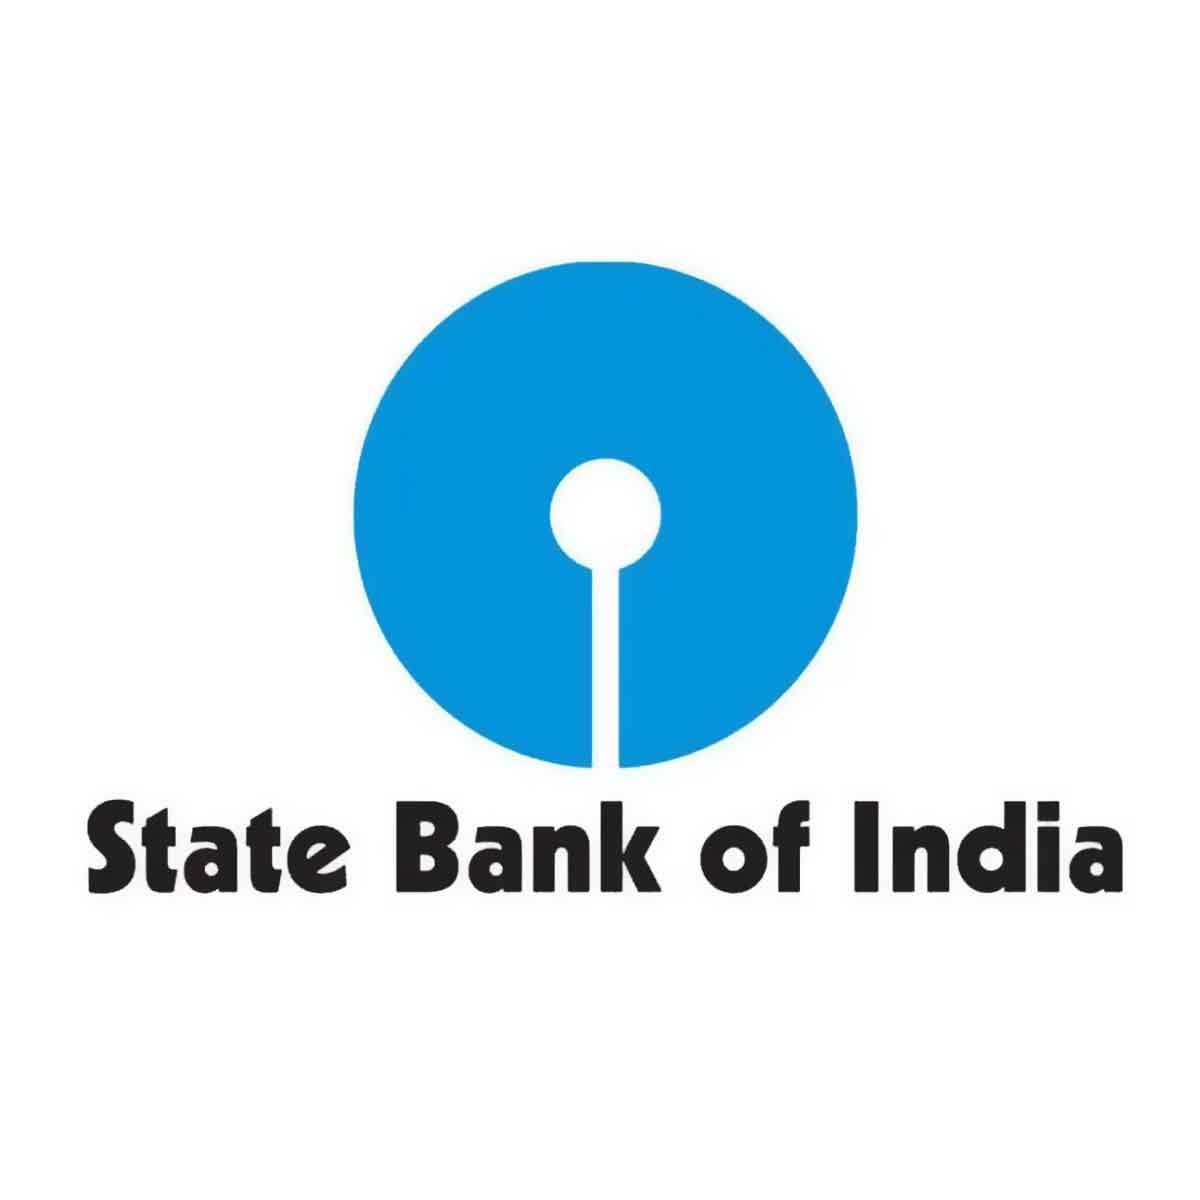 Sbi Cbo - Circle Based Officer Recruitment - State Bank Of India Job Vacancies